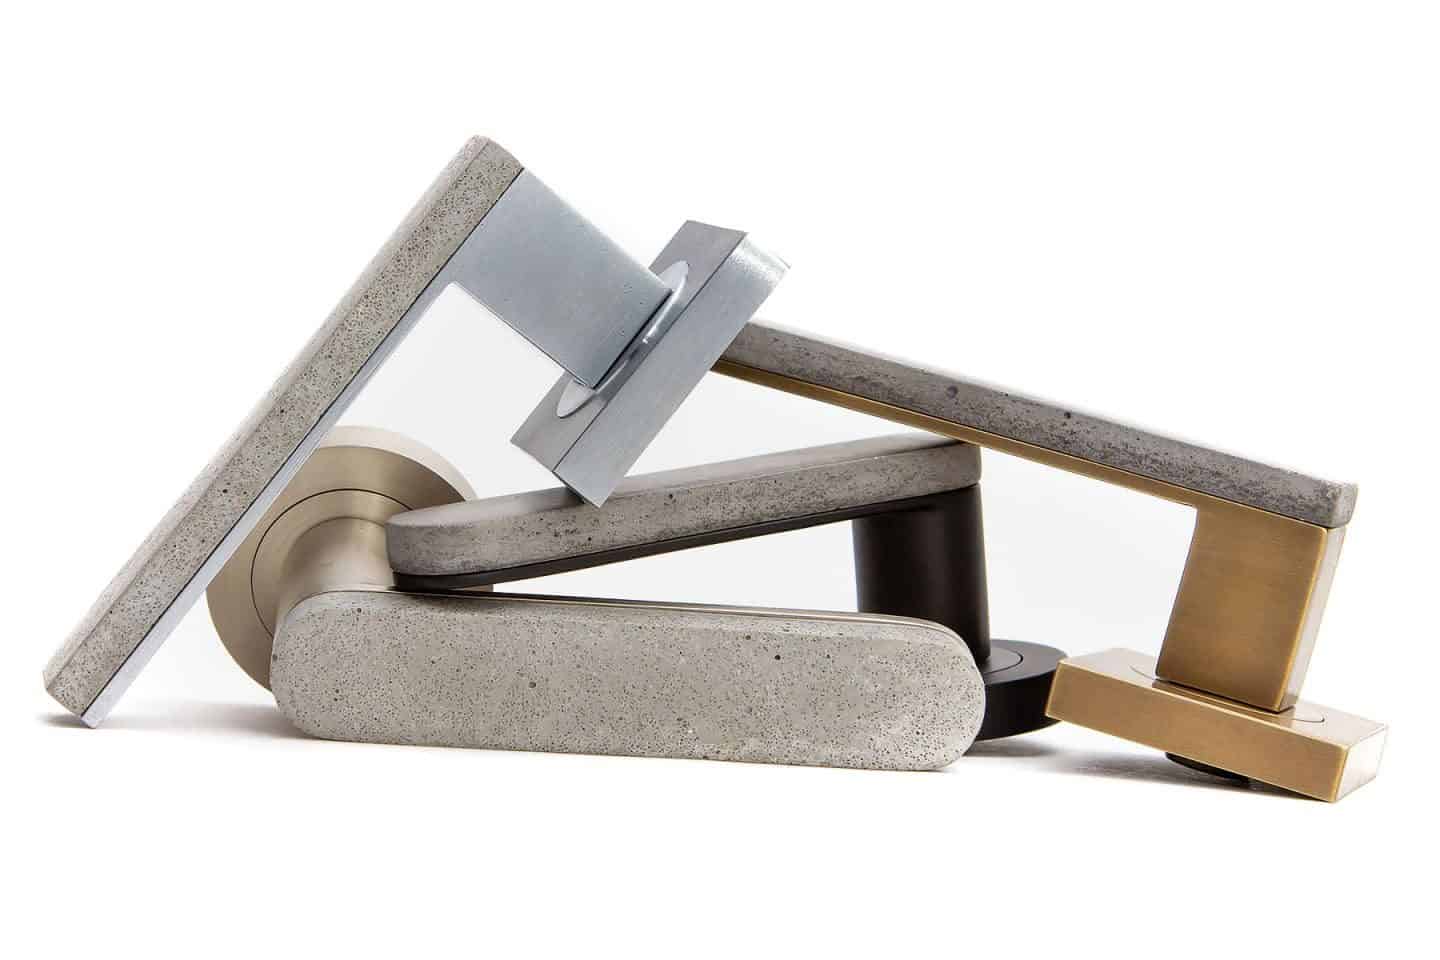 Bullet & Stone designer door handles made from metal and concrete